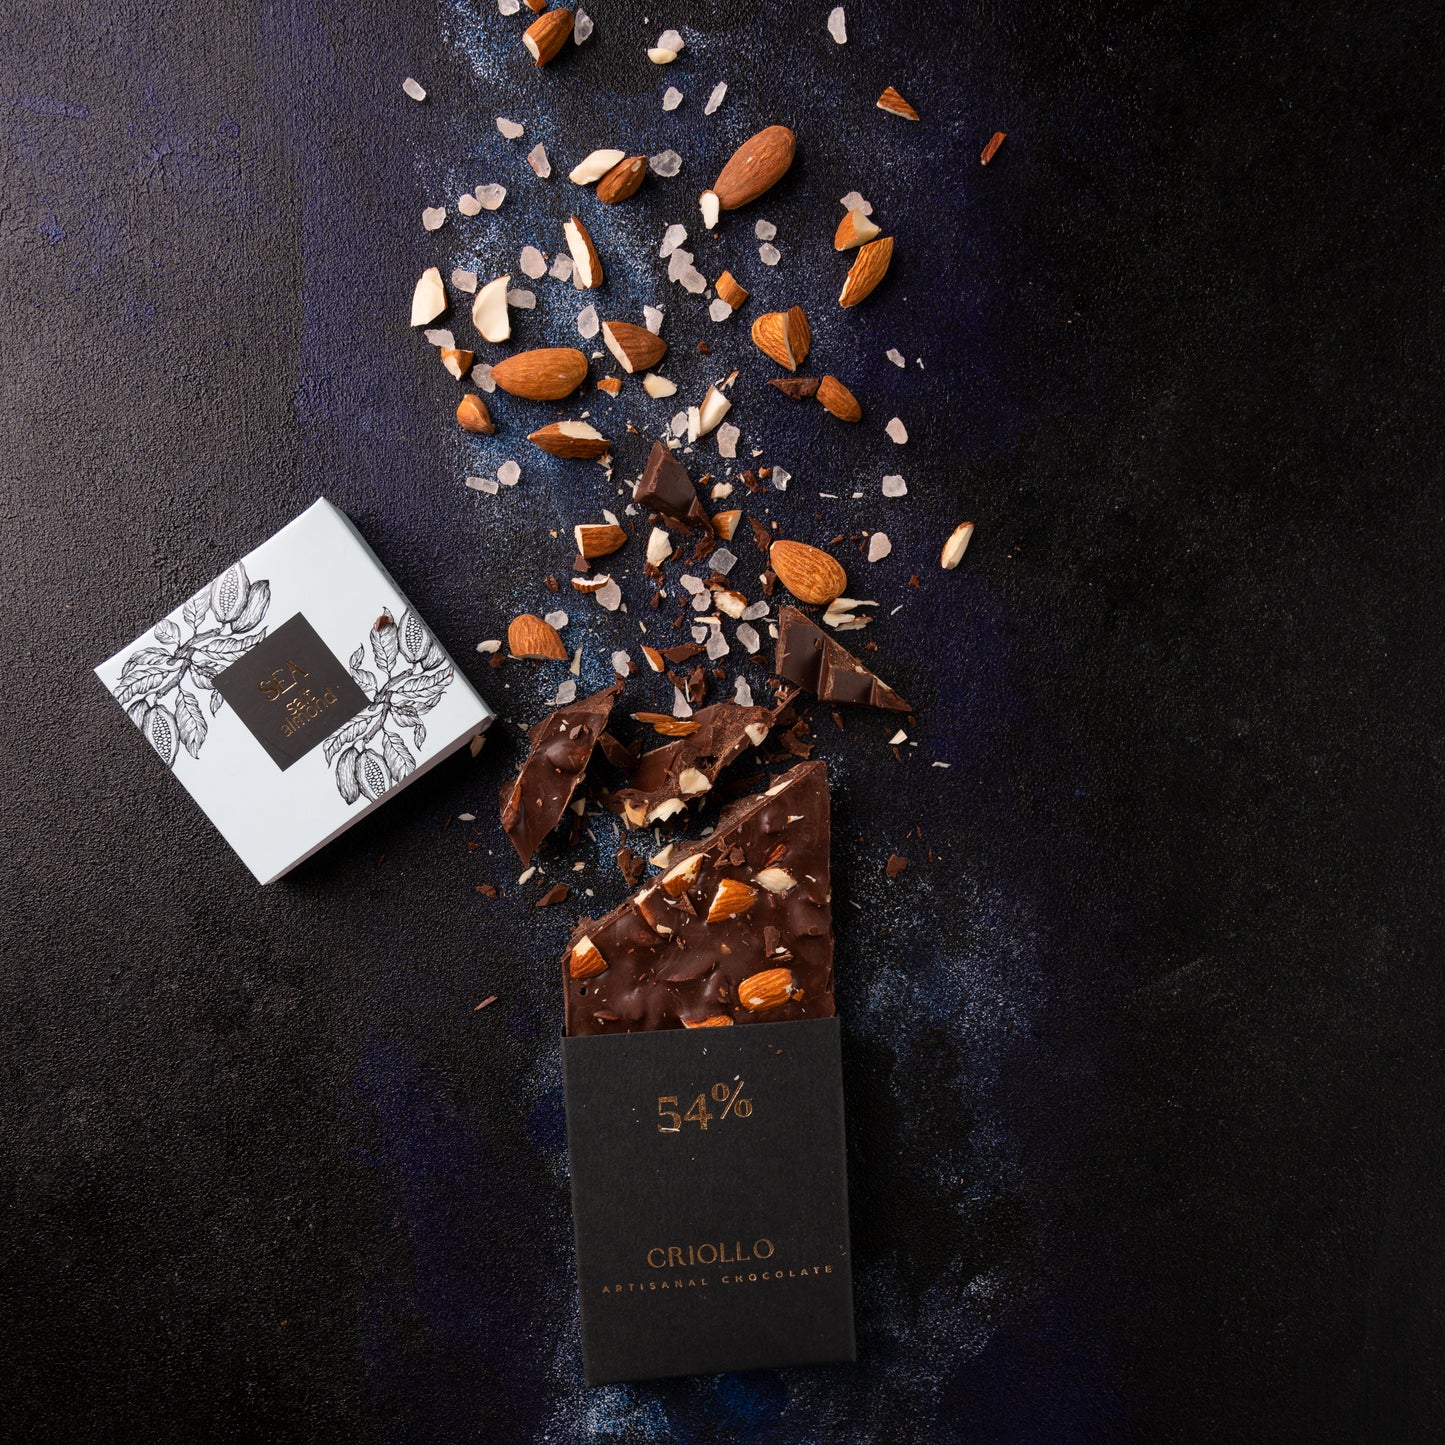 Sea Salt Almond - 54% Premium Dark Chocolate Bar